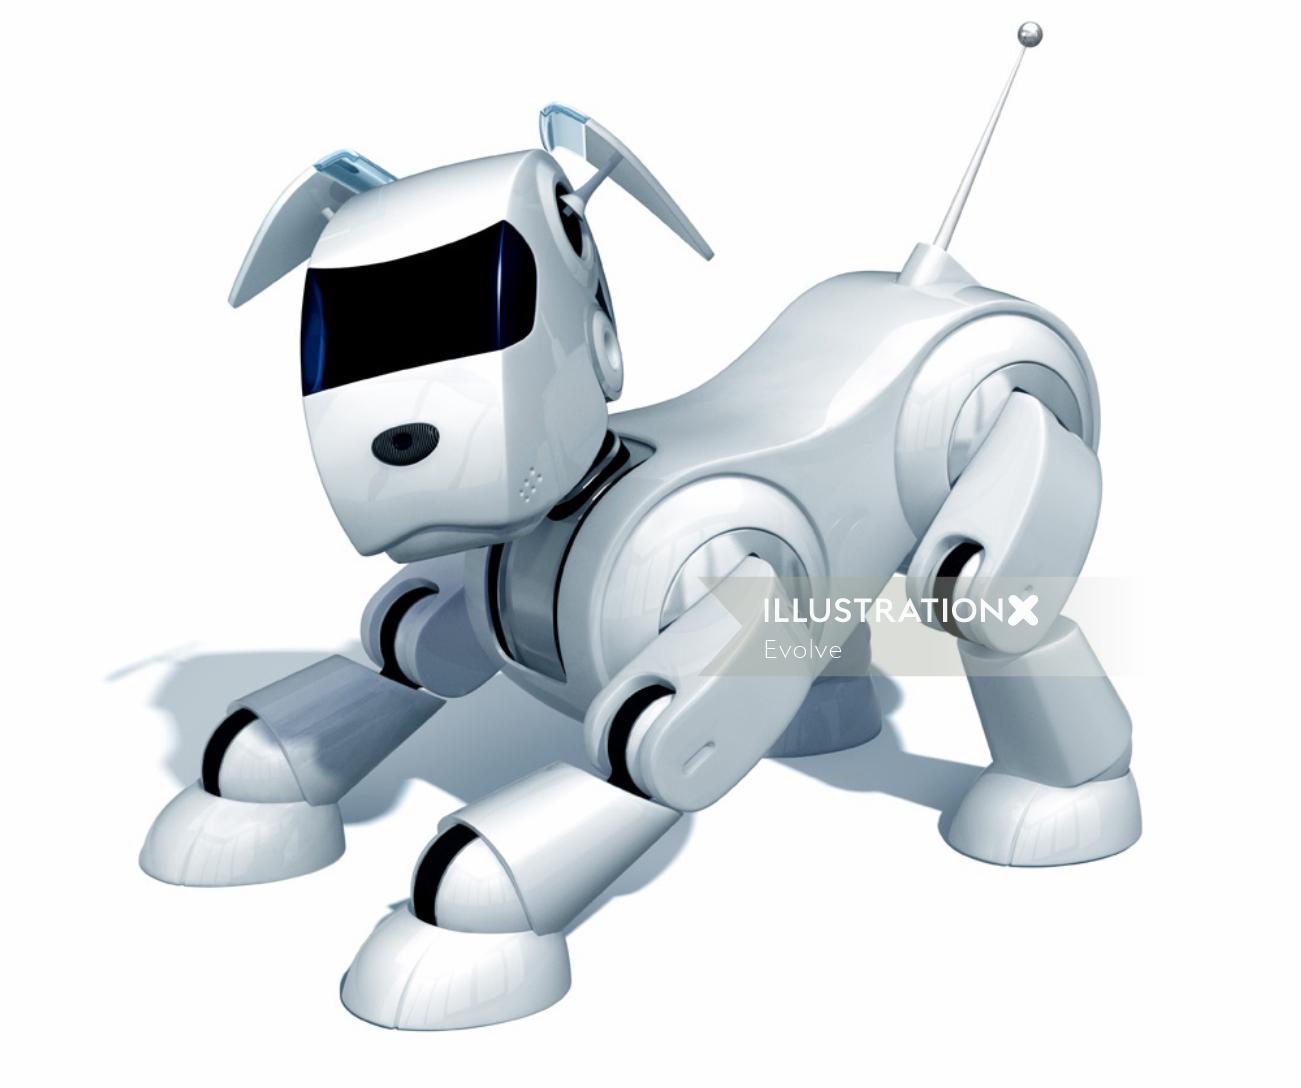 Illustration of Robot dog